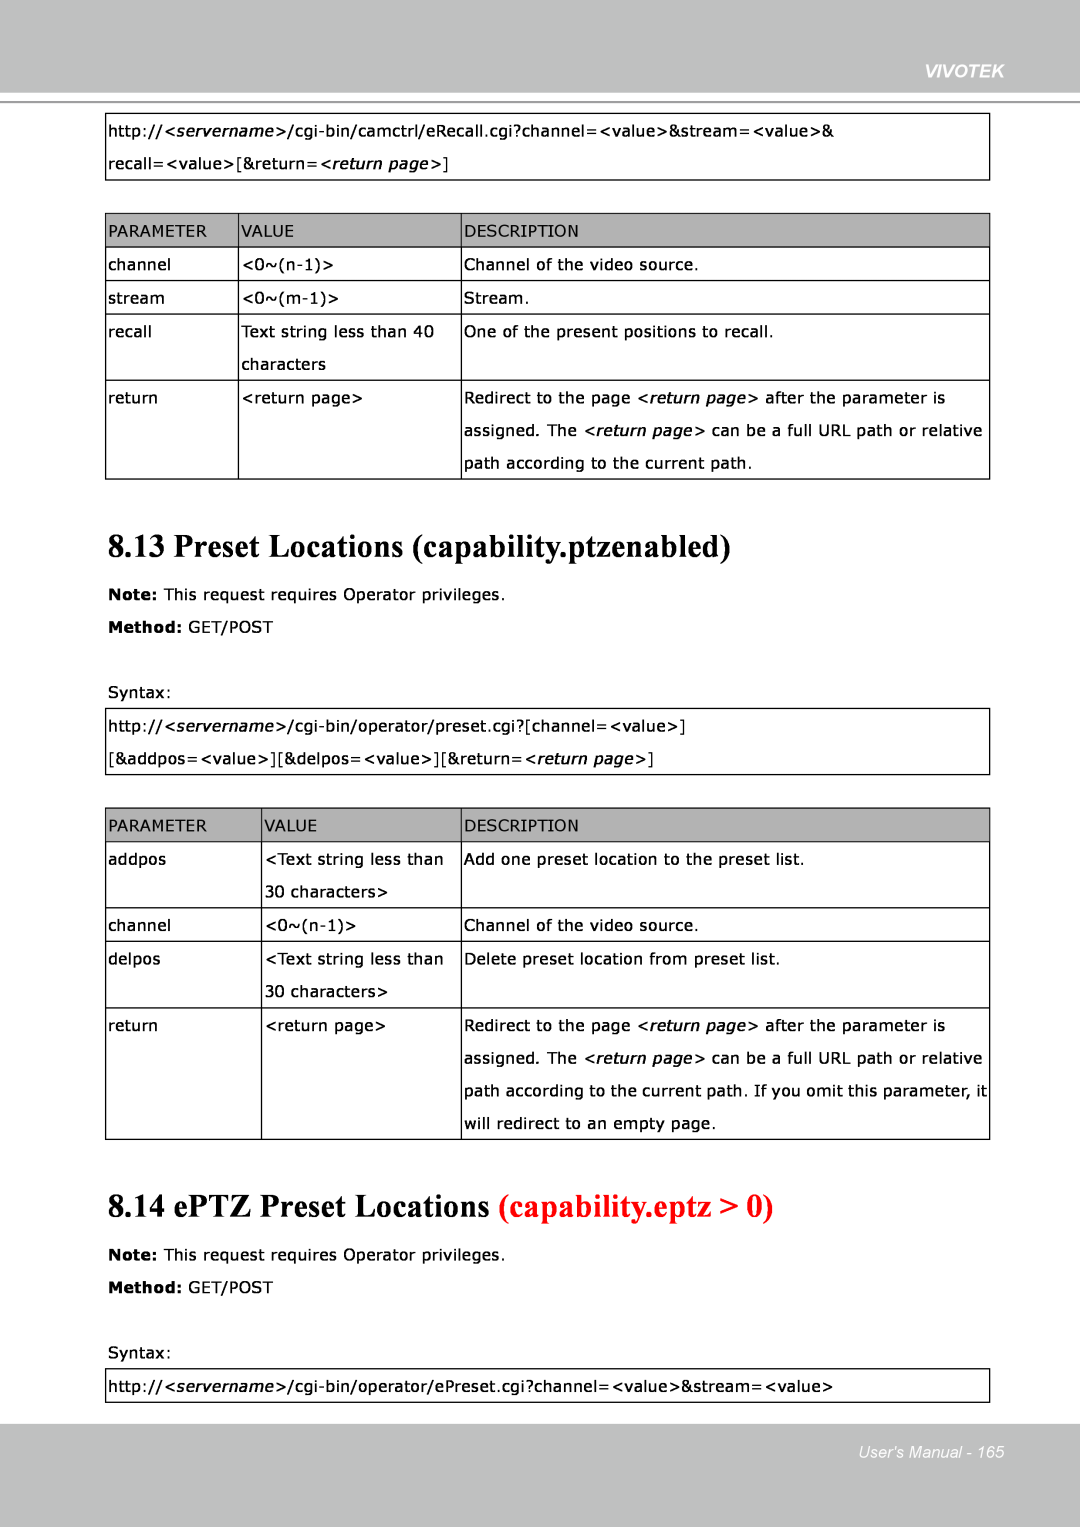 Vivotek IP8151 Preset Locations capability.ptzenabled, ePTZ Preset Locations capability.eptz, Vivotek, Method: GET/POST 